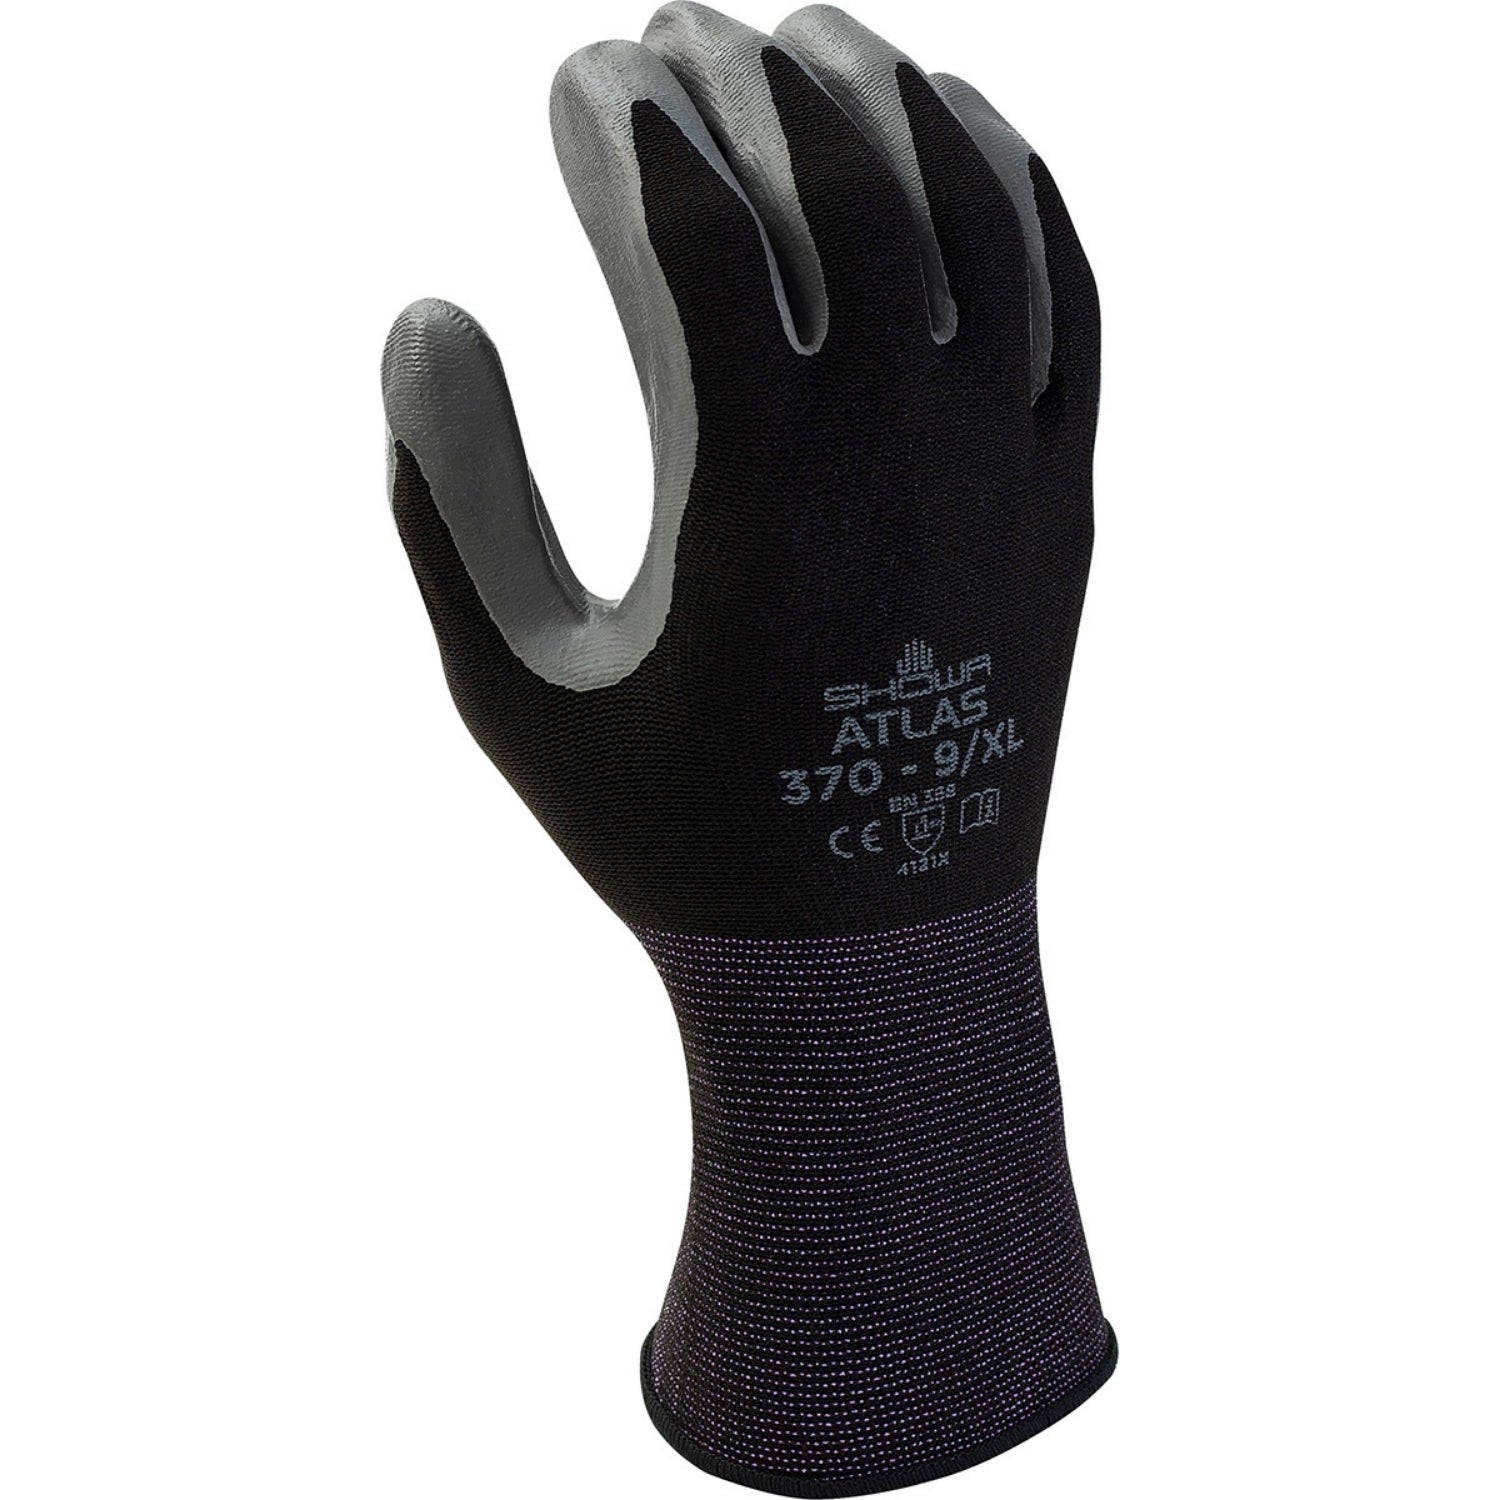 SHOWA 370B - General Purpose Gloves 12 Pack